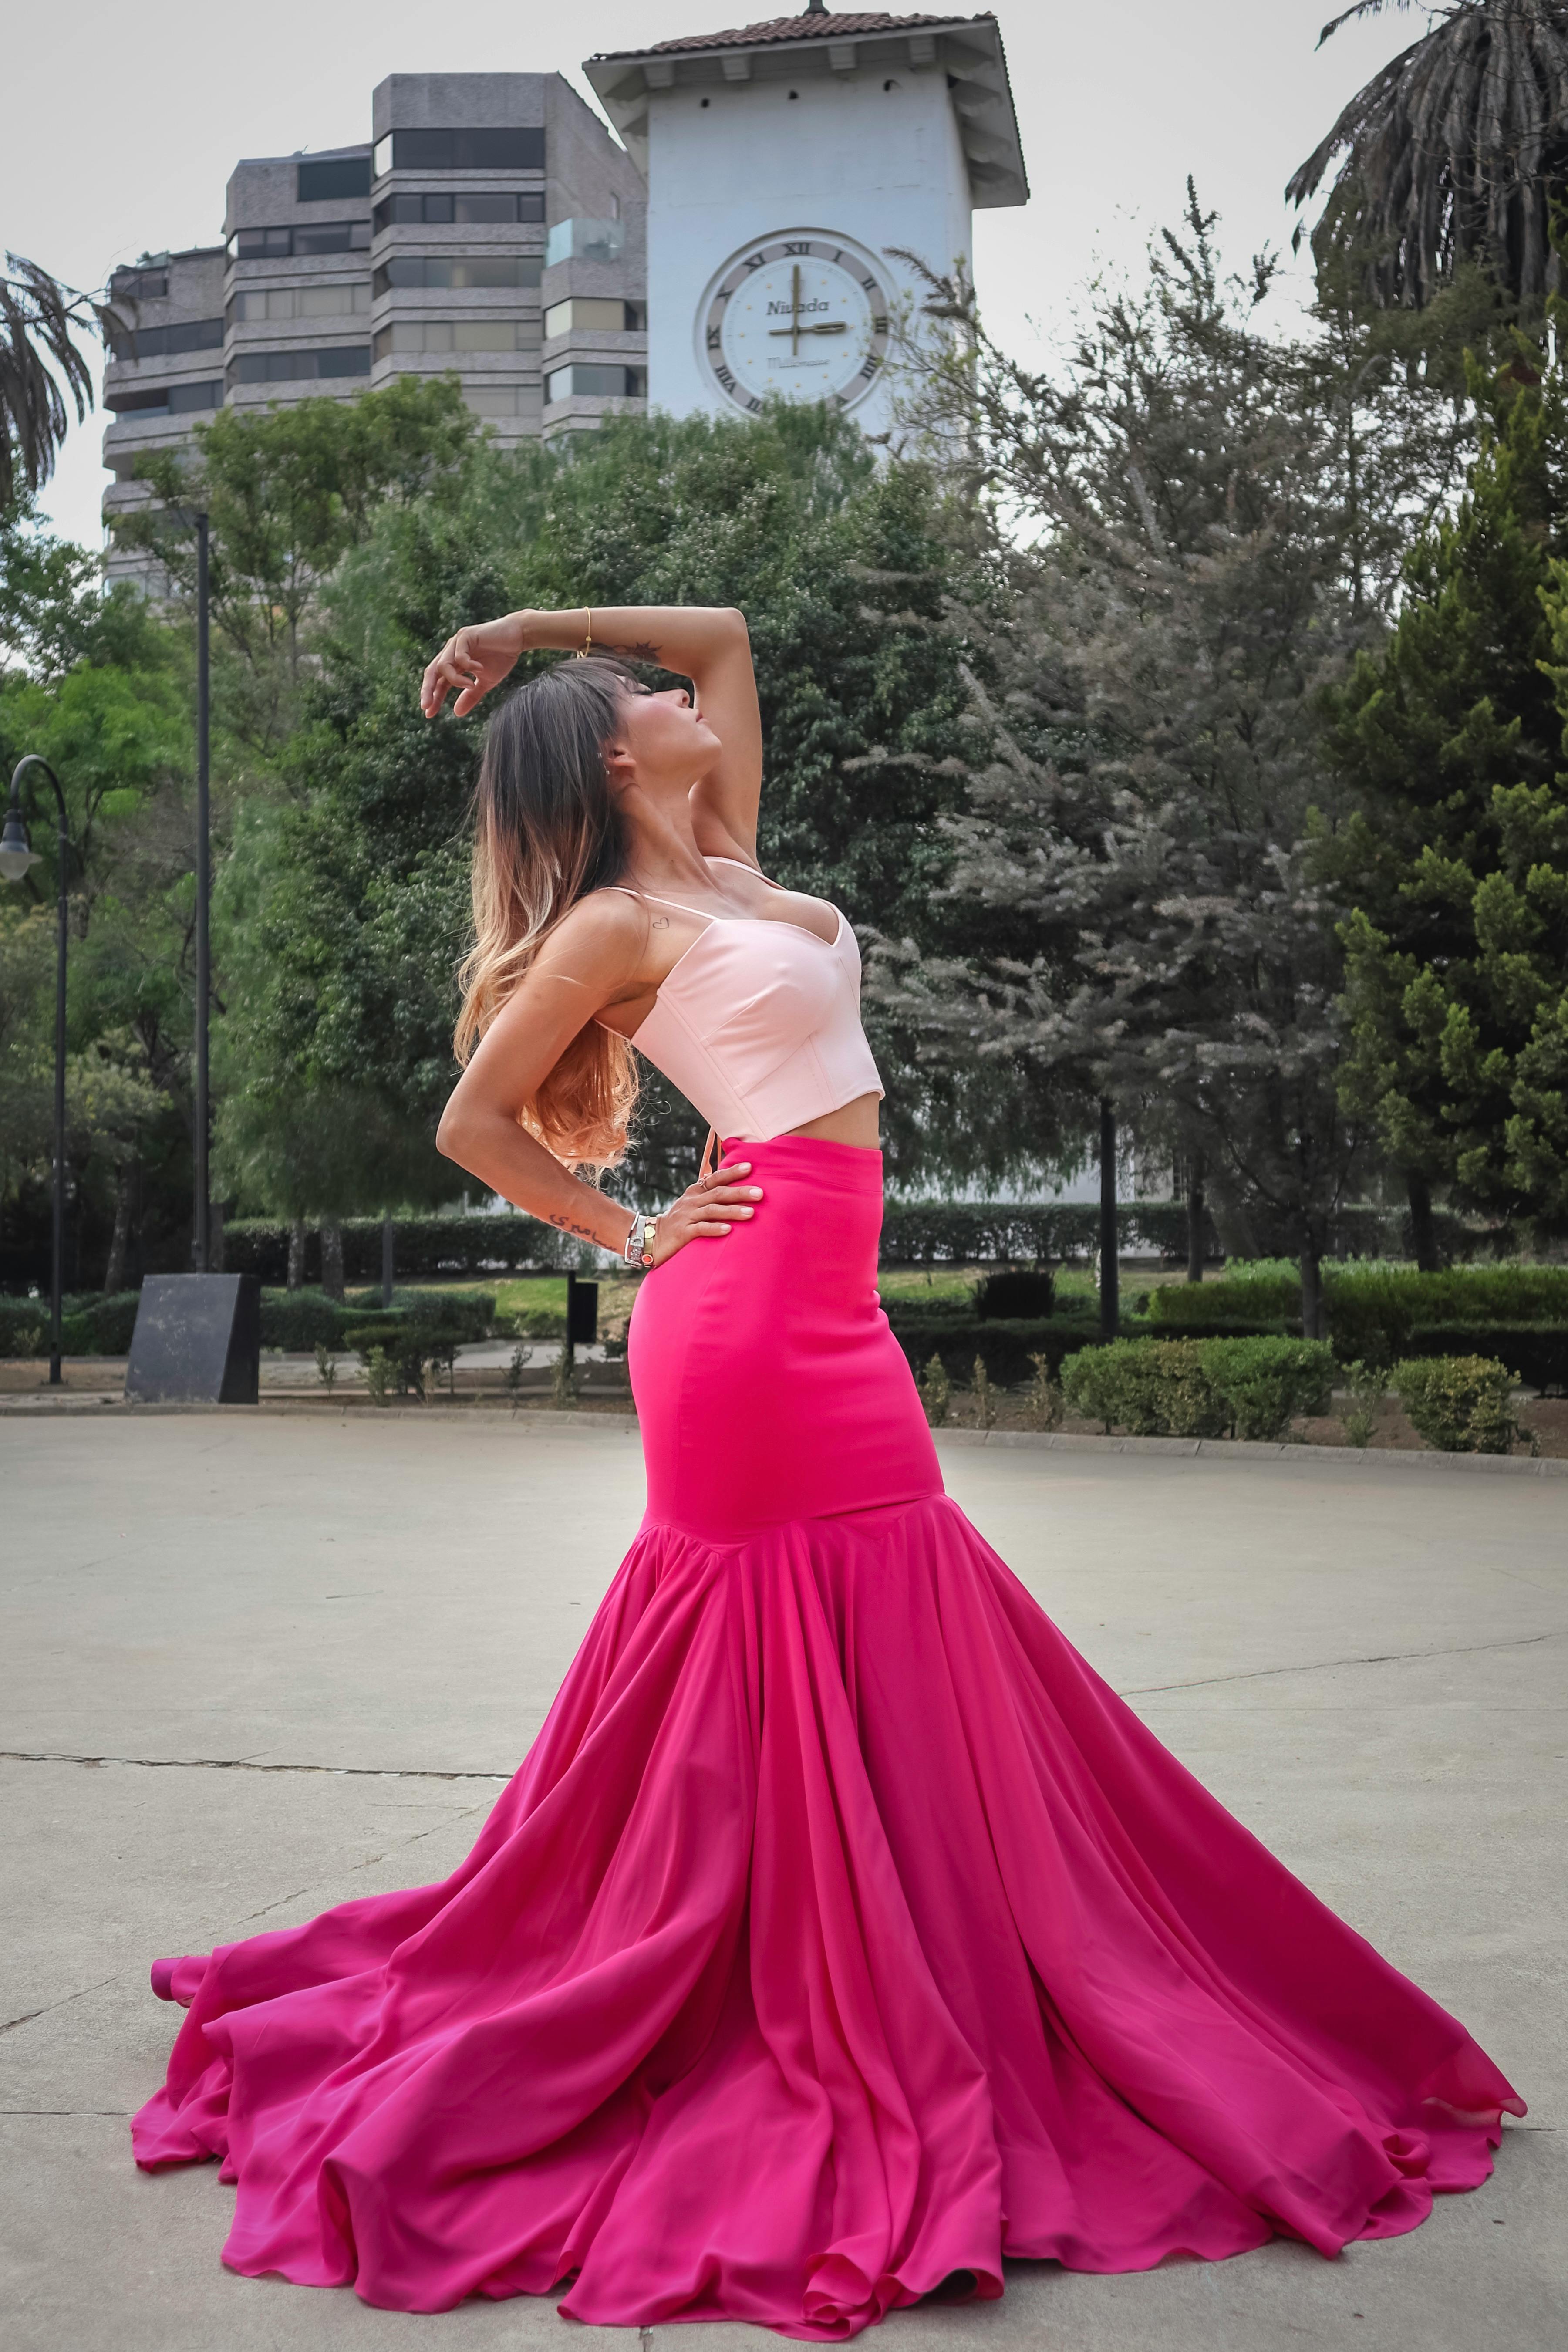 pt 2 of long dress/prom pose ideas✨ dresses from @bellabarnettofficial... |  TikTok